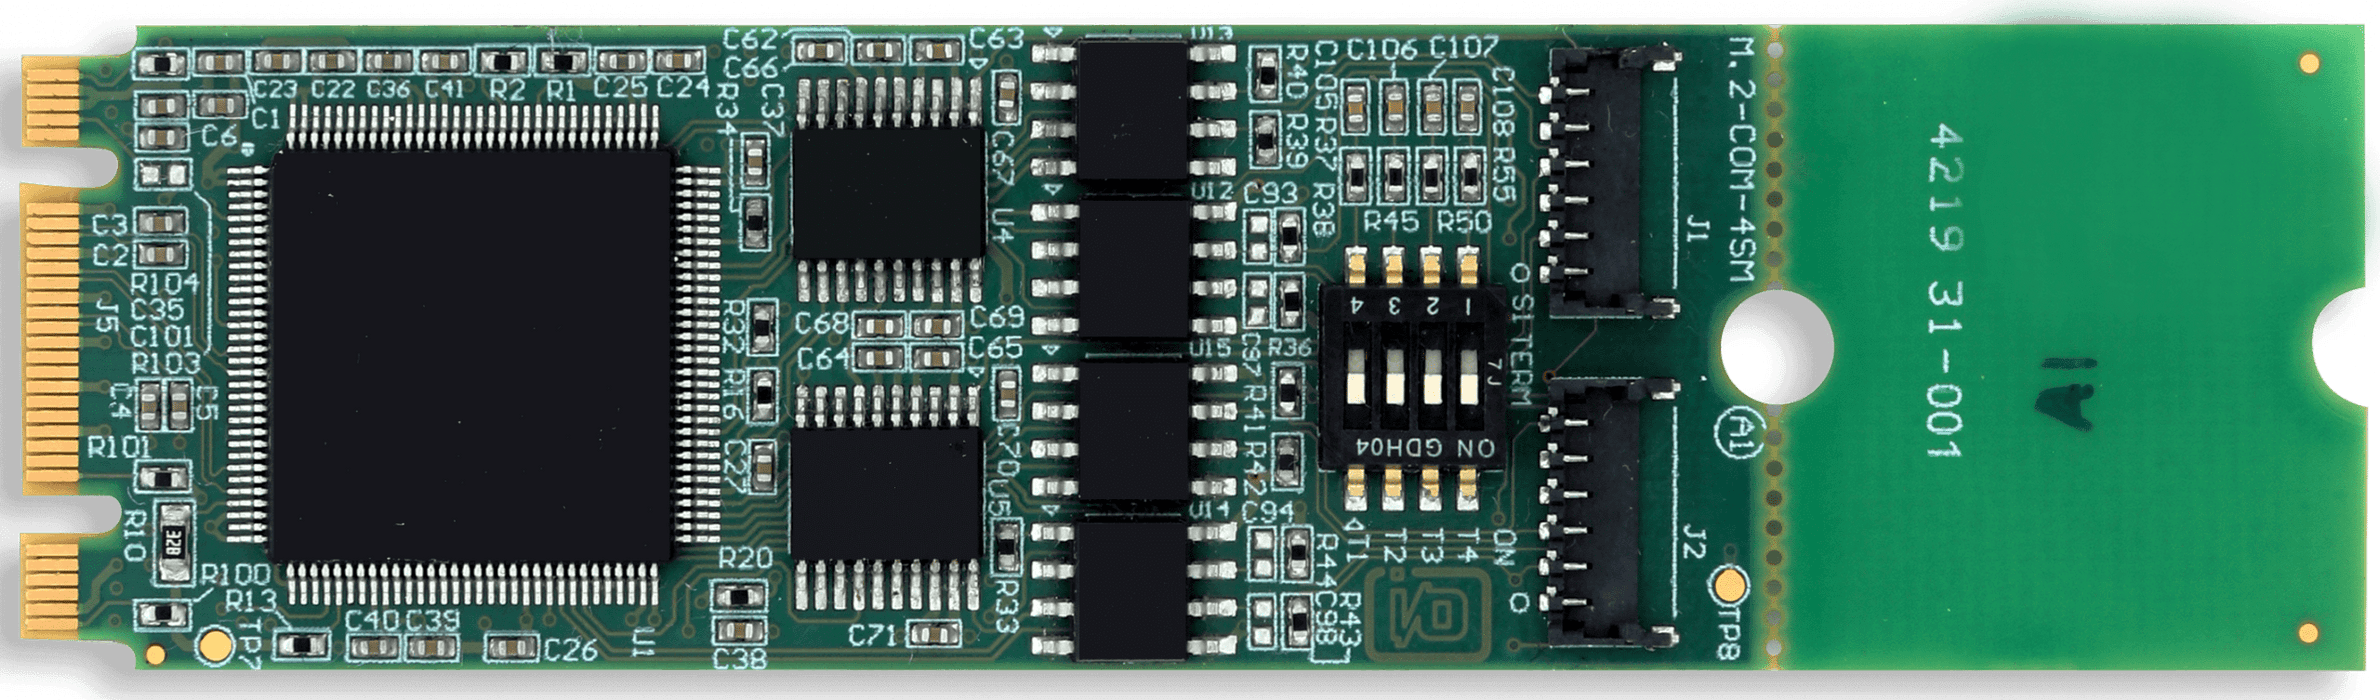 Four-Port RS-232 M.2 Card